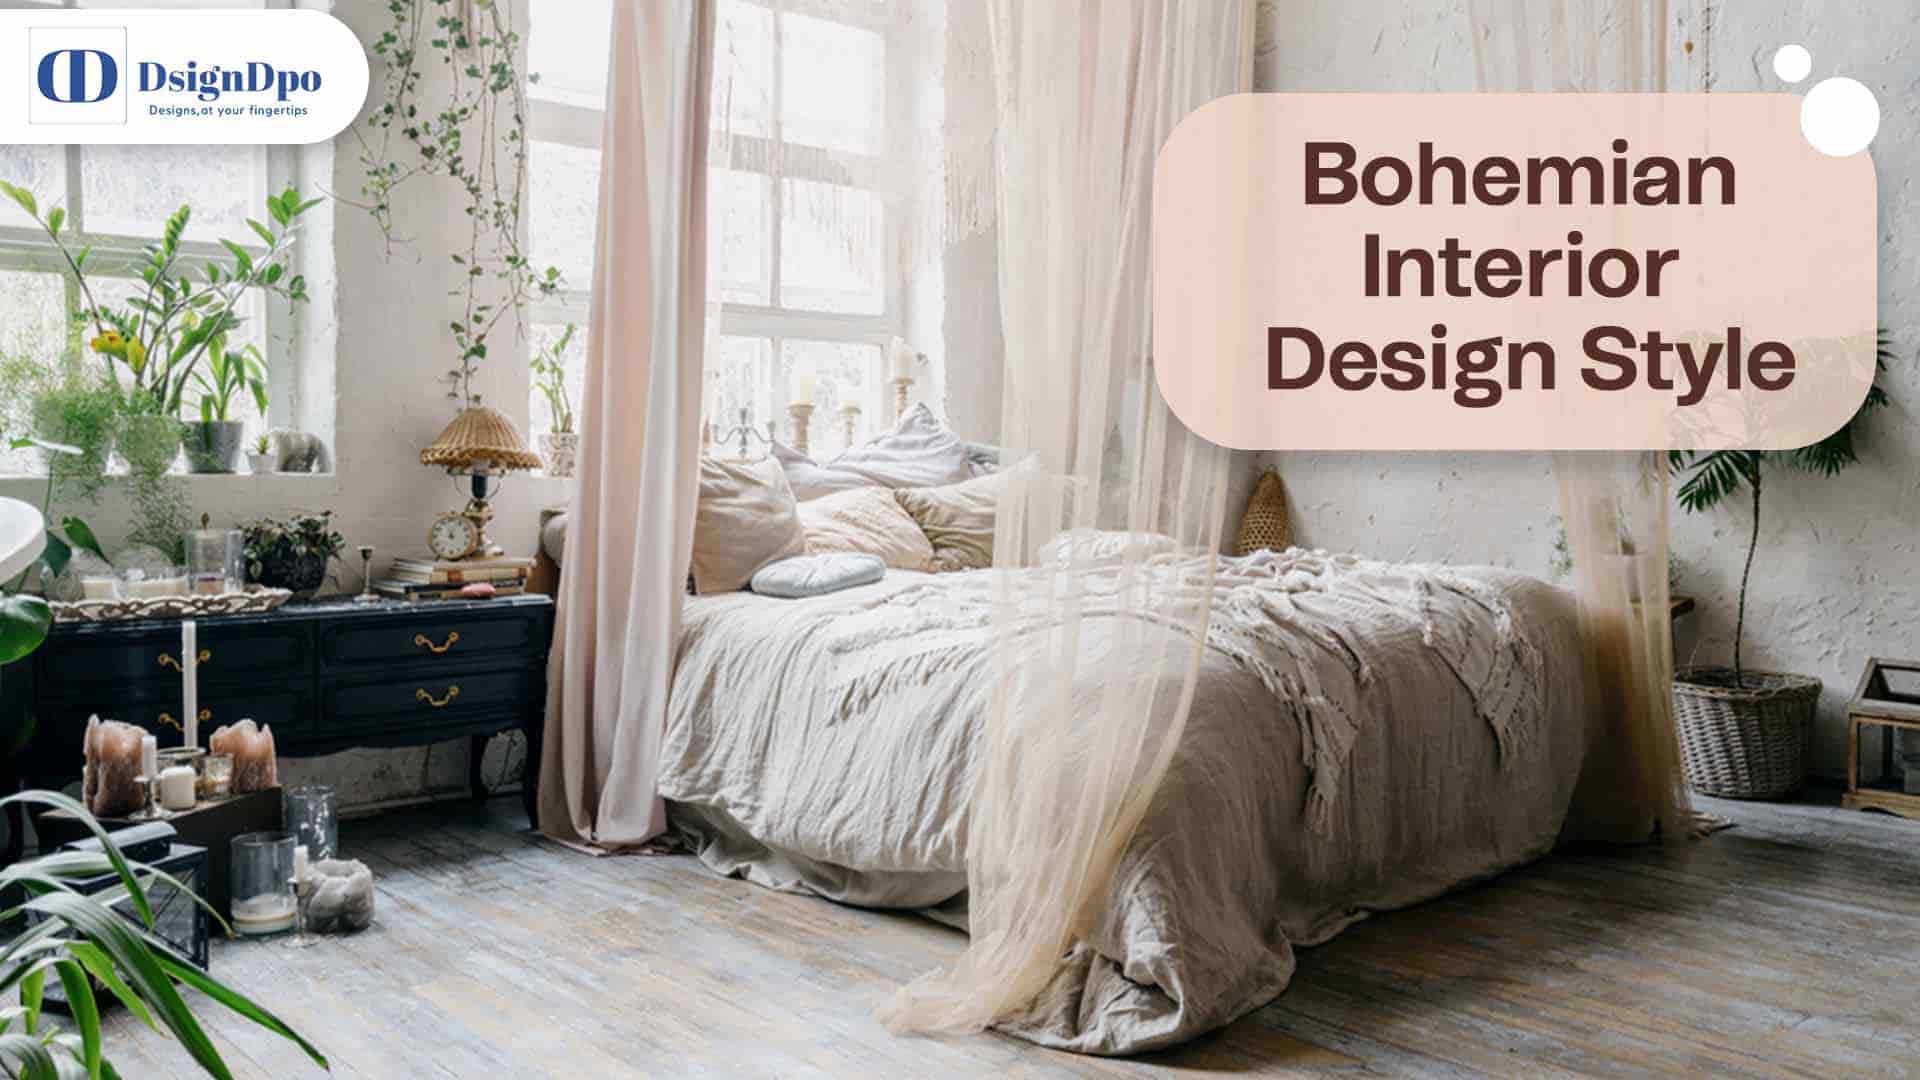 Bohemian Interior Design Style